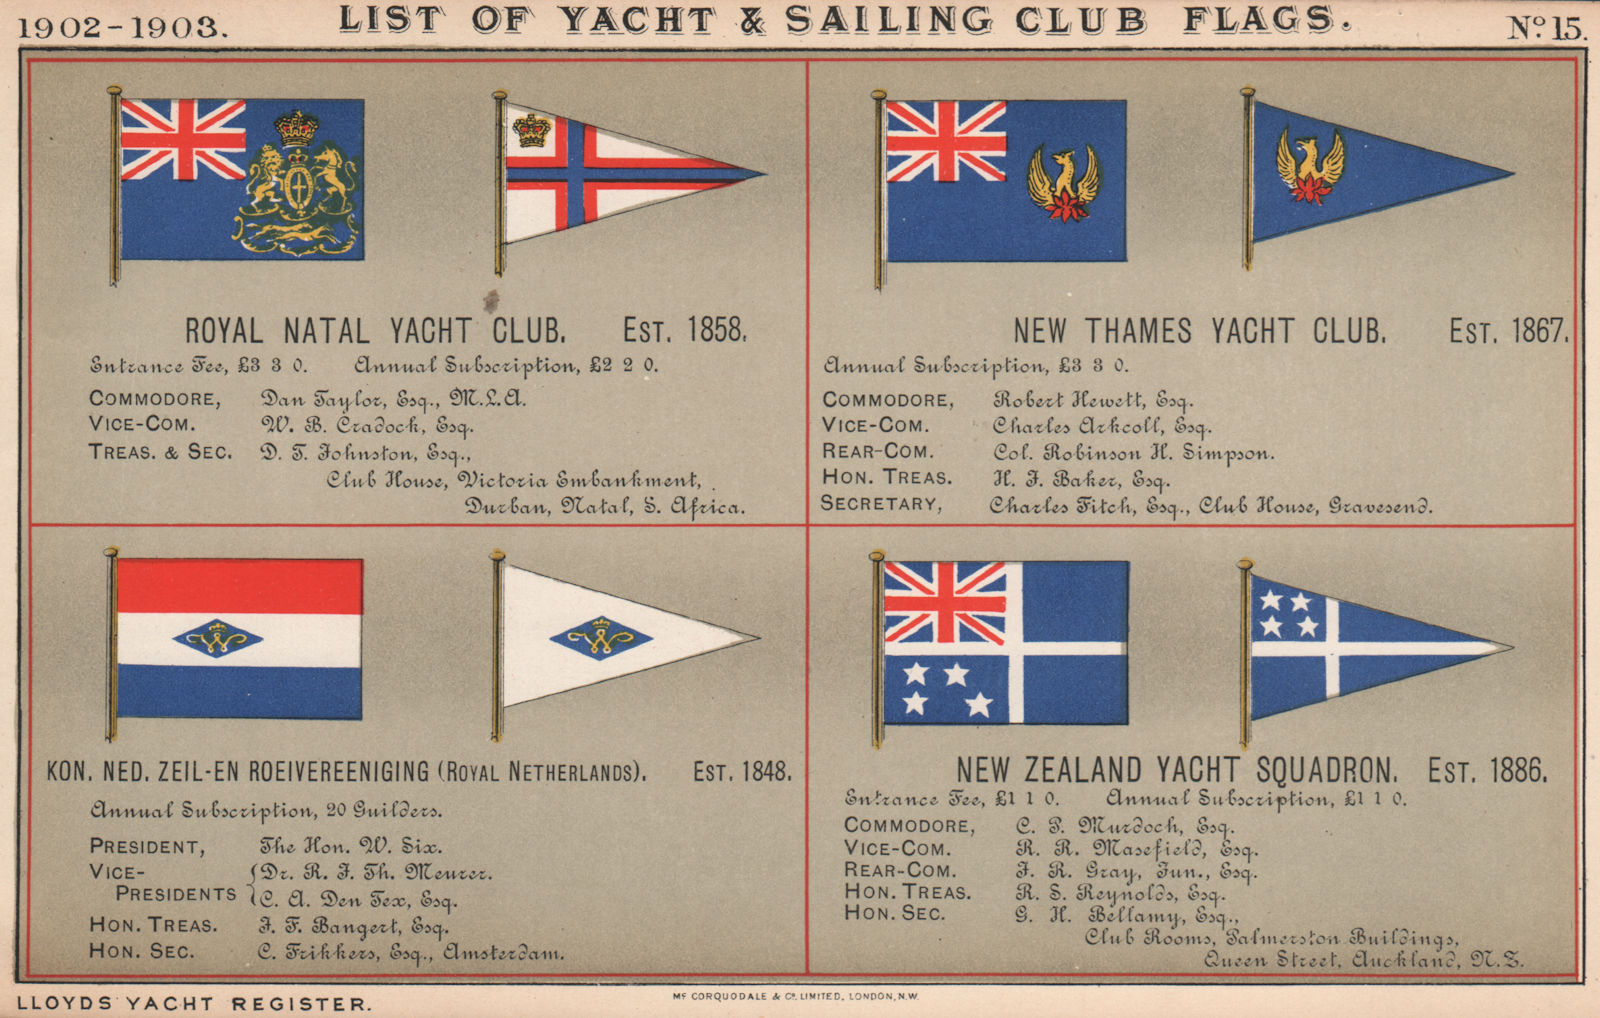 ROYAL YACHT/SAILING CLUB FLAGS. Natal. New Thames. Netherlands. New Zealand 1902